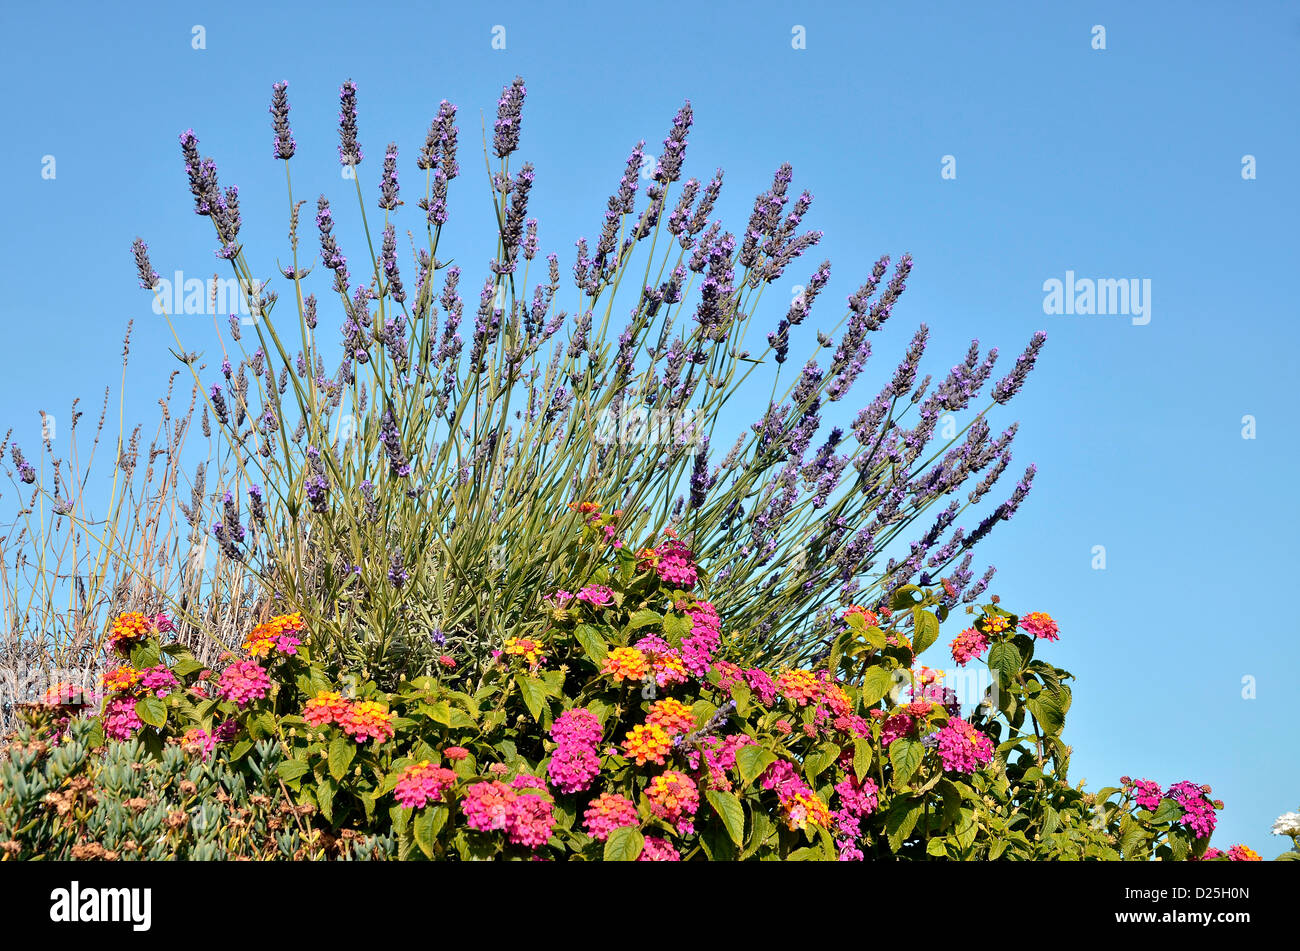 Lavender and Lantana camara flowers on the blue sky background Stock Photo